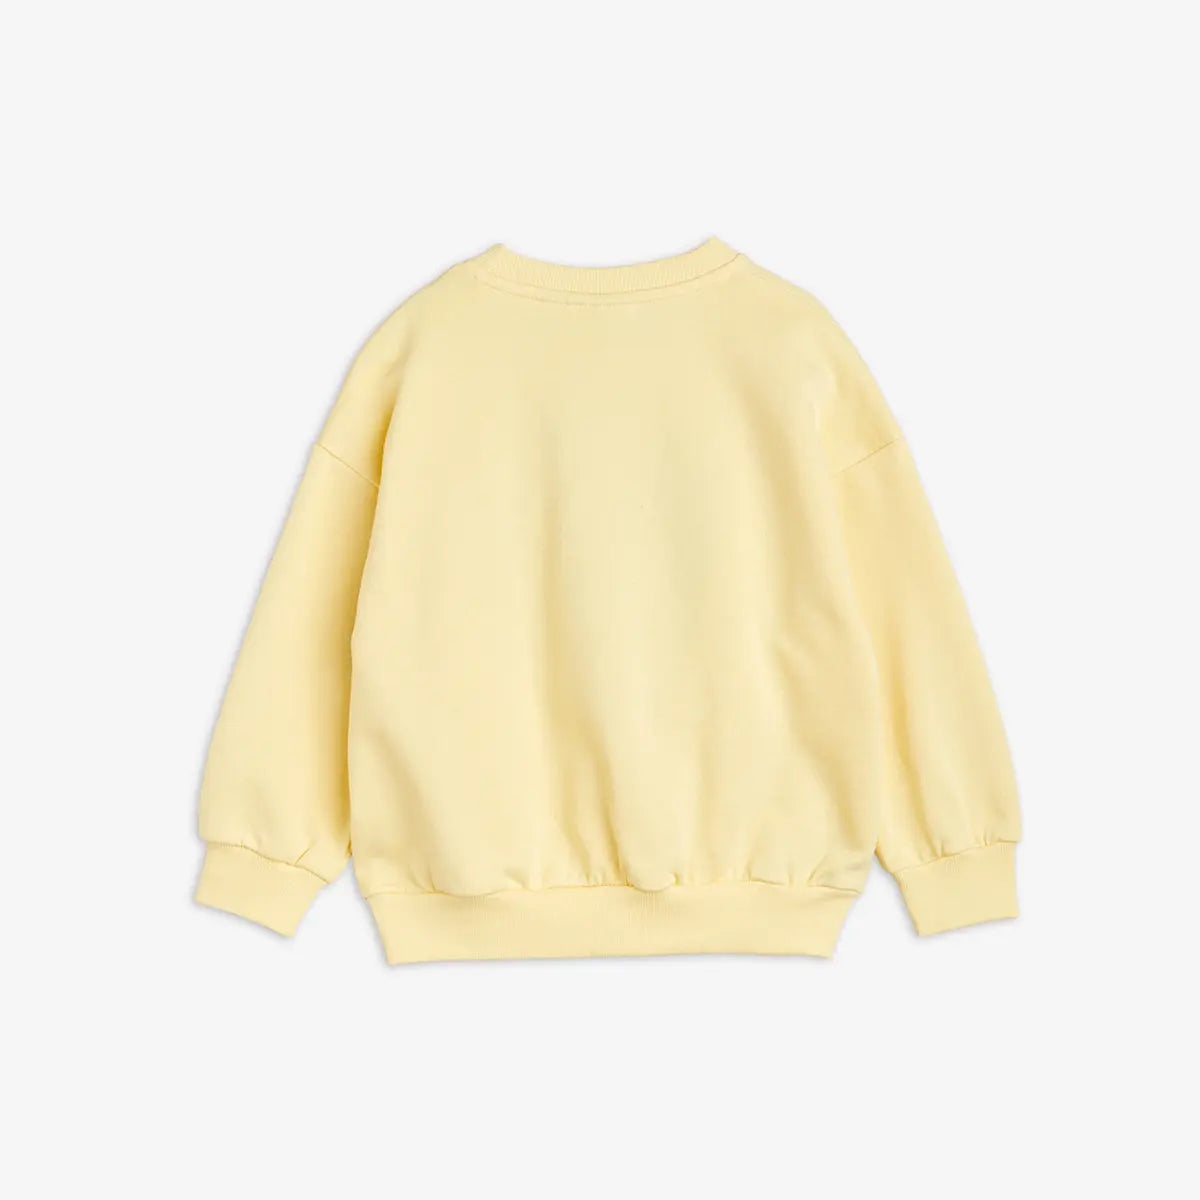 Radish Sweater